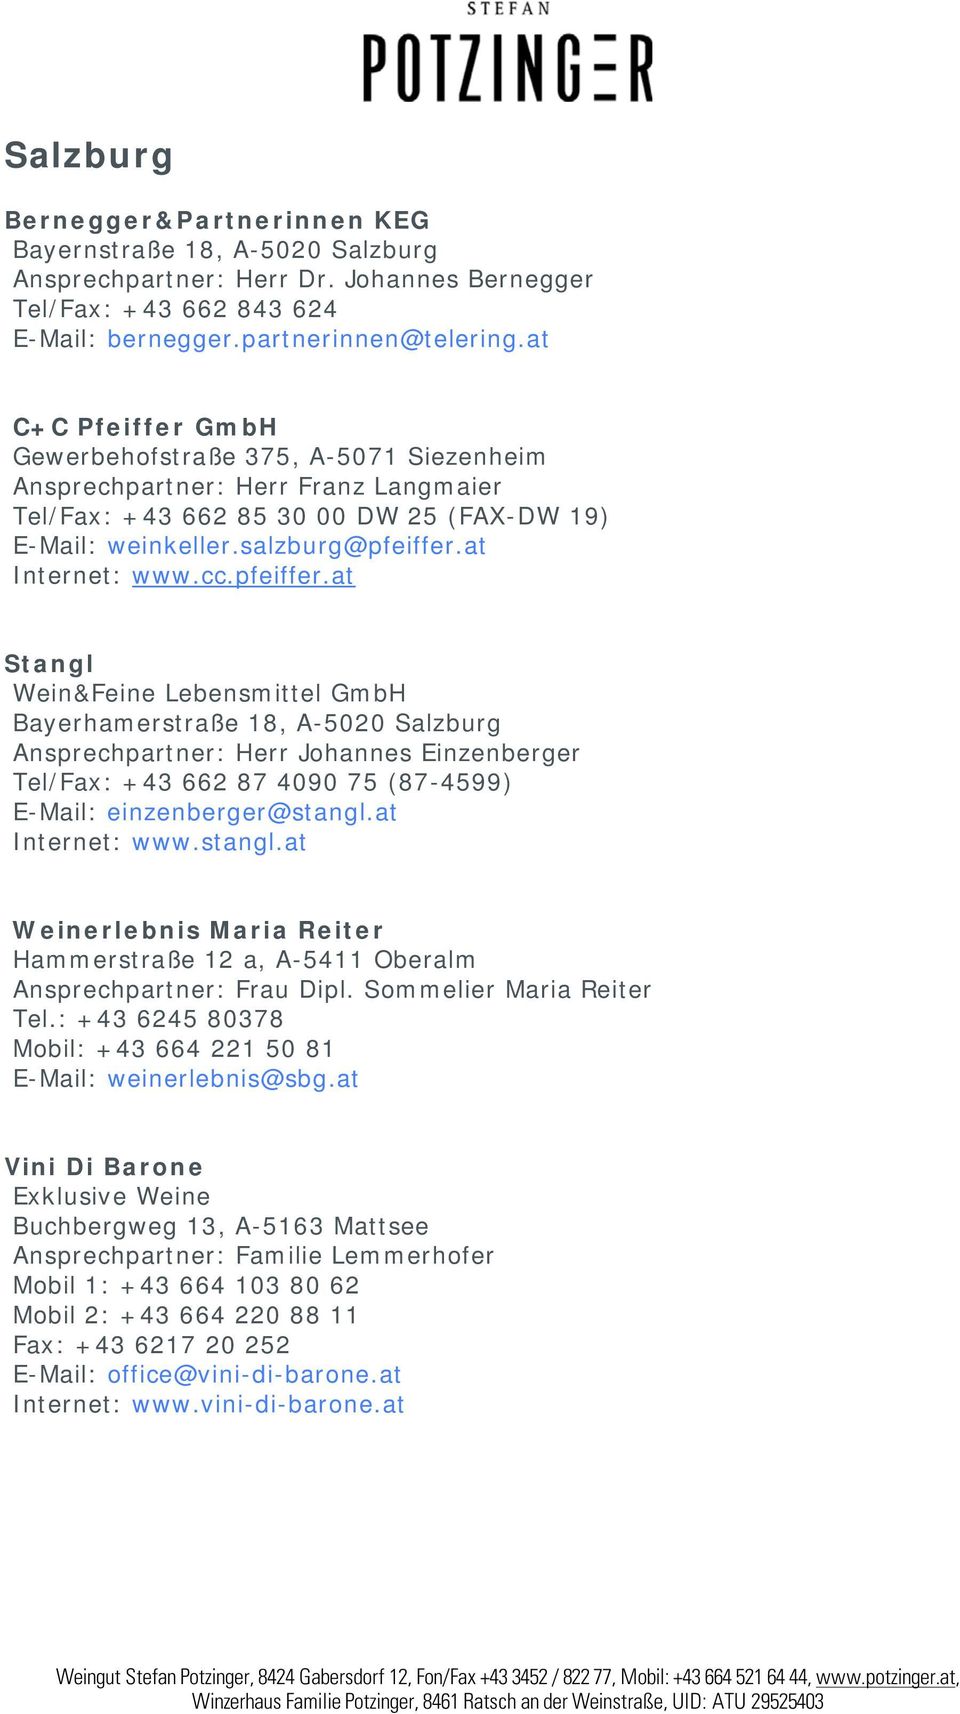 at Stangl Wein&Feine Lebensmittel GmbH Bayerhamerstraße 18, A-5020 Salzburg Ansprechpartner: Herr Johannes Einzenberger Tel/Fax: +43 662 87 4090 75 (87-4599) E-Mail: einzenberger@stangl.